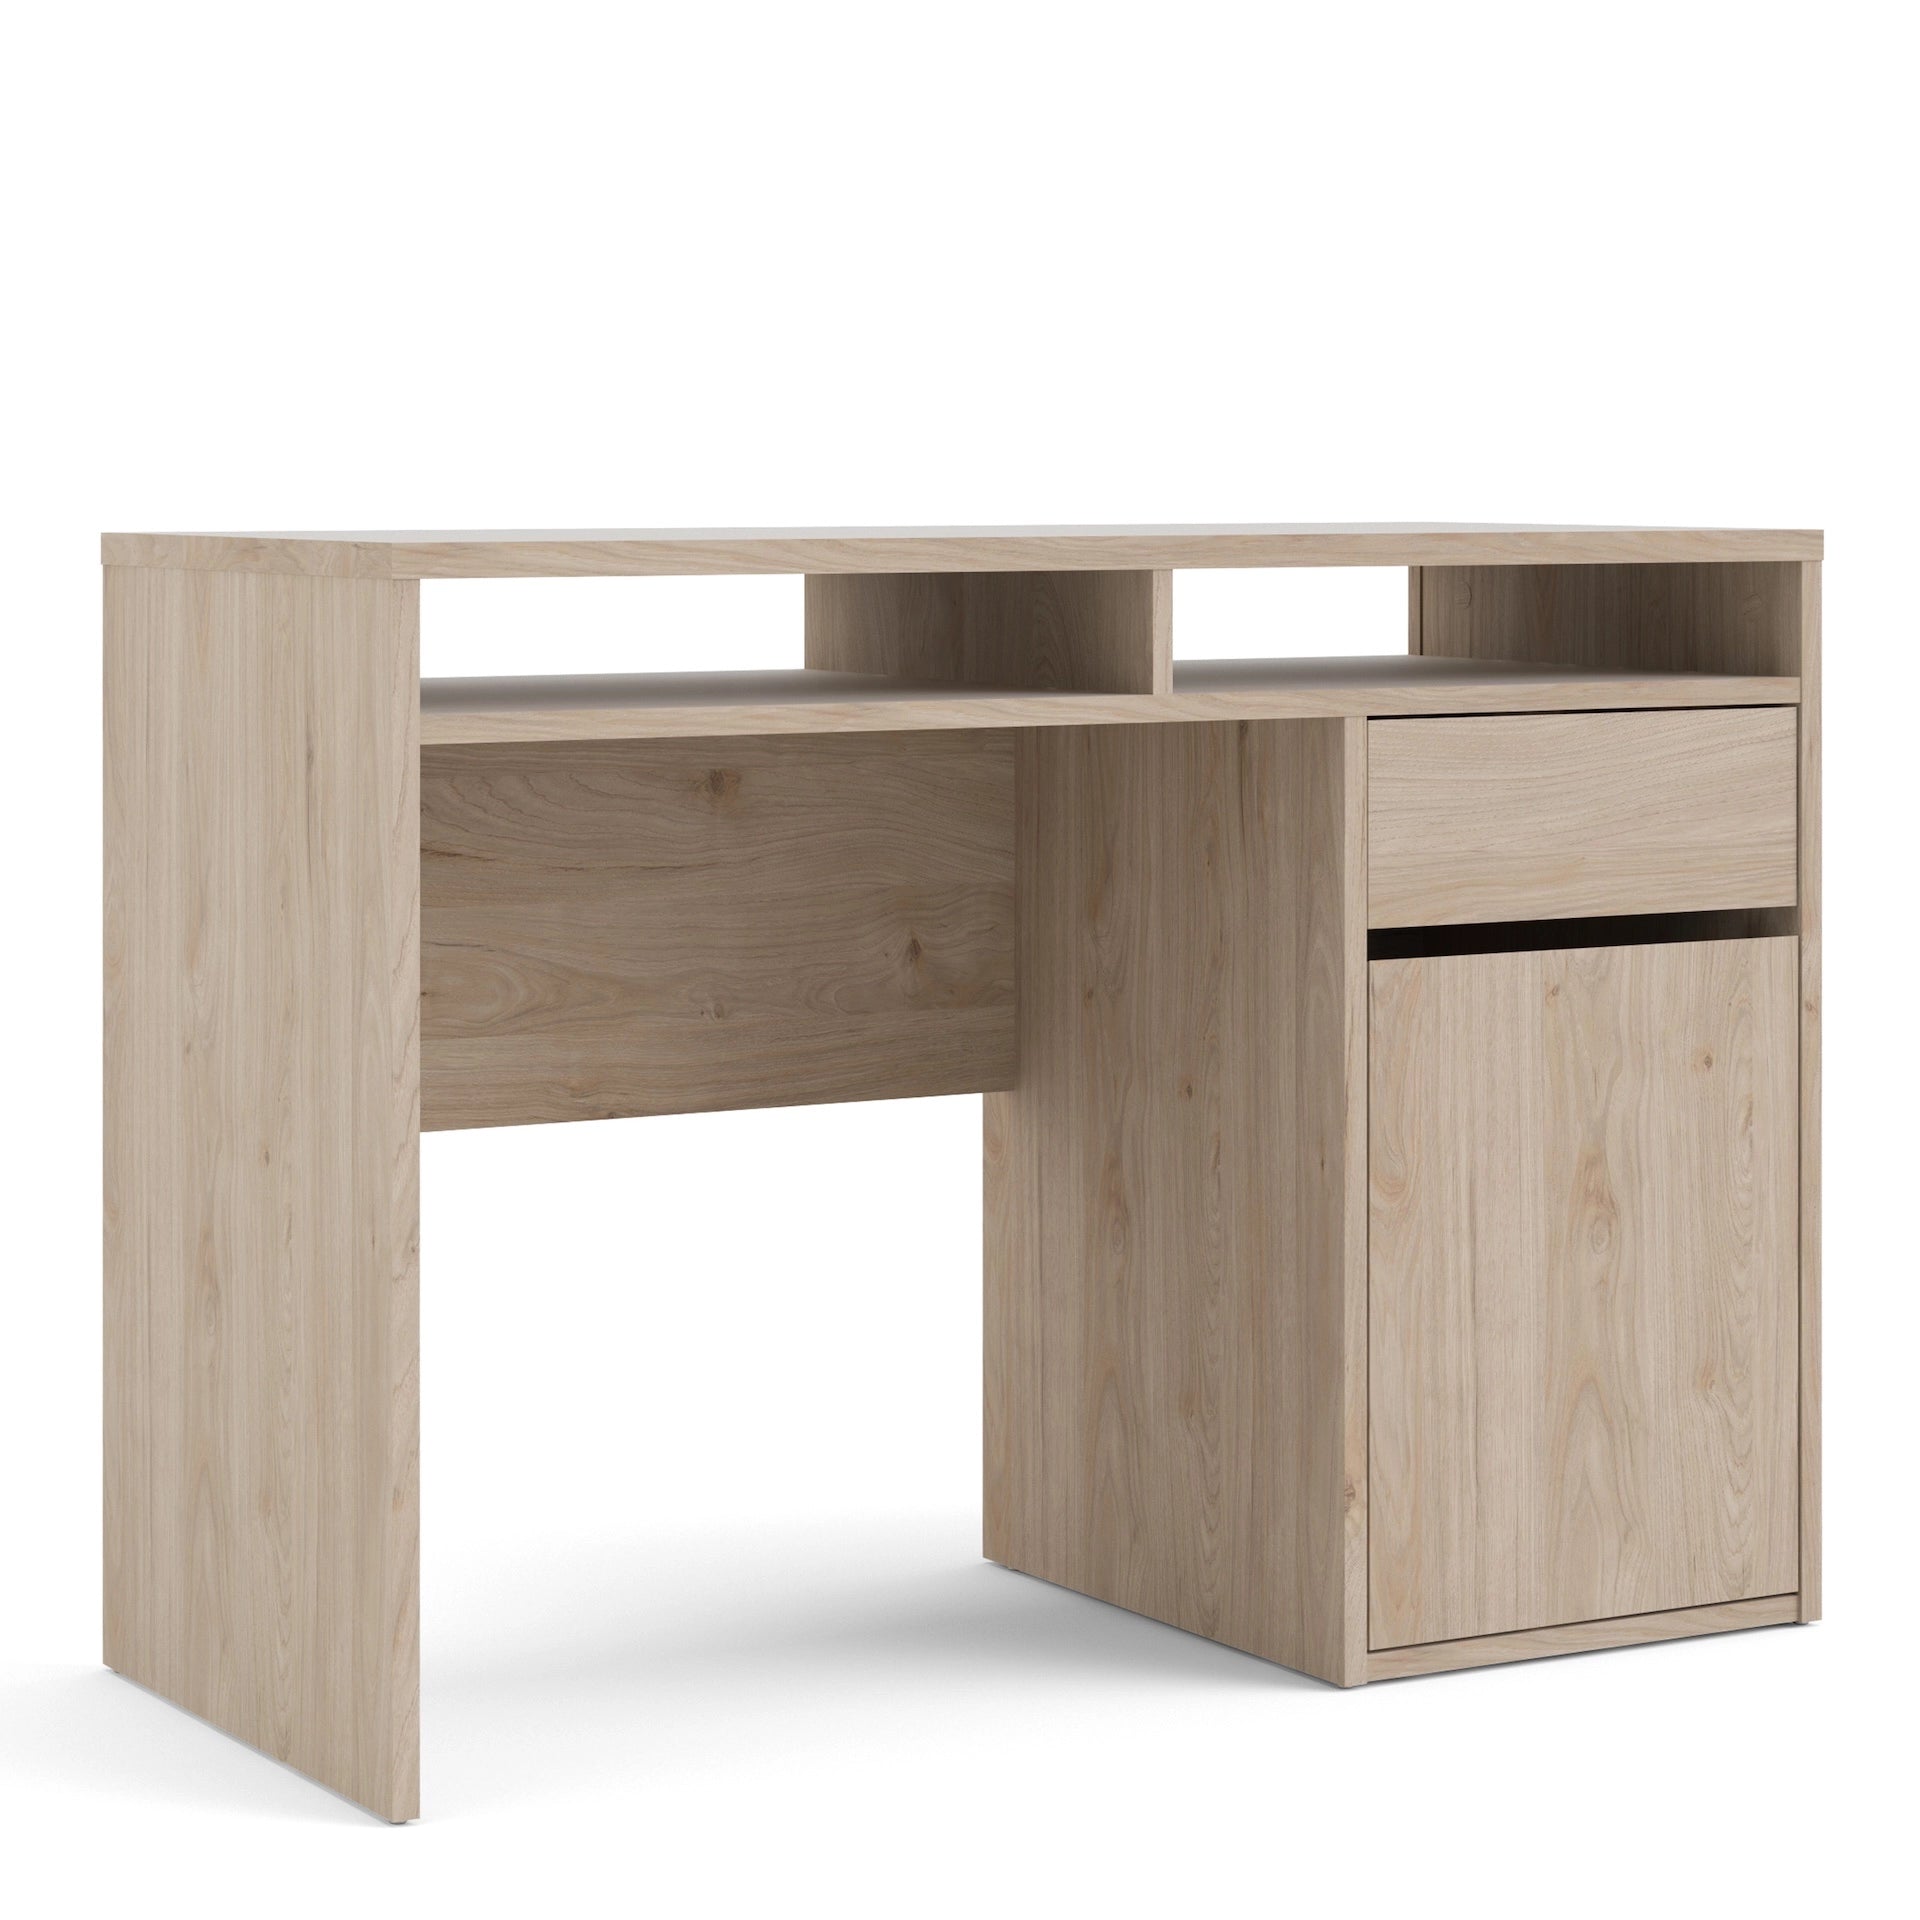 Furniture To Go Function Plus Desk 1 Door 1 Drawer in Jackson Hickory Oak